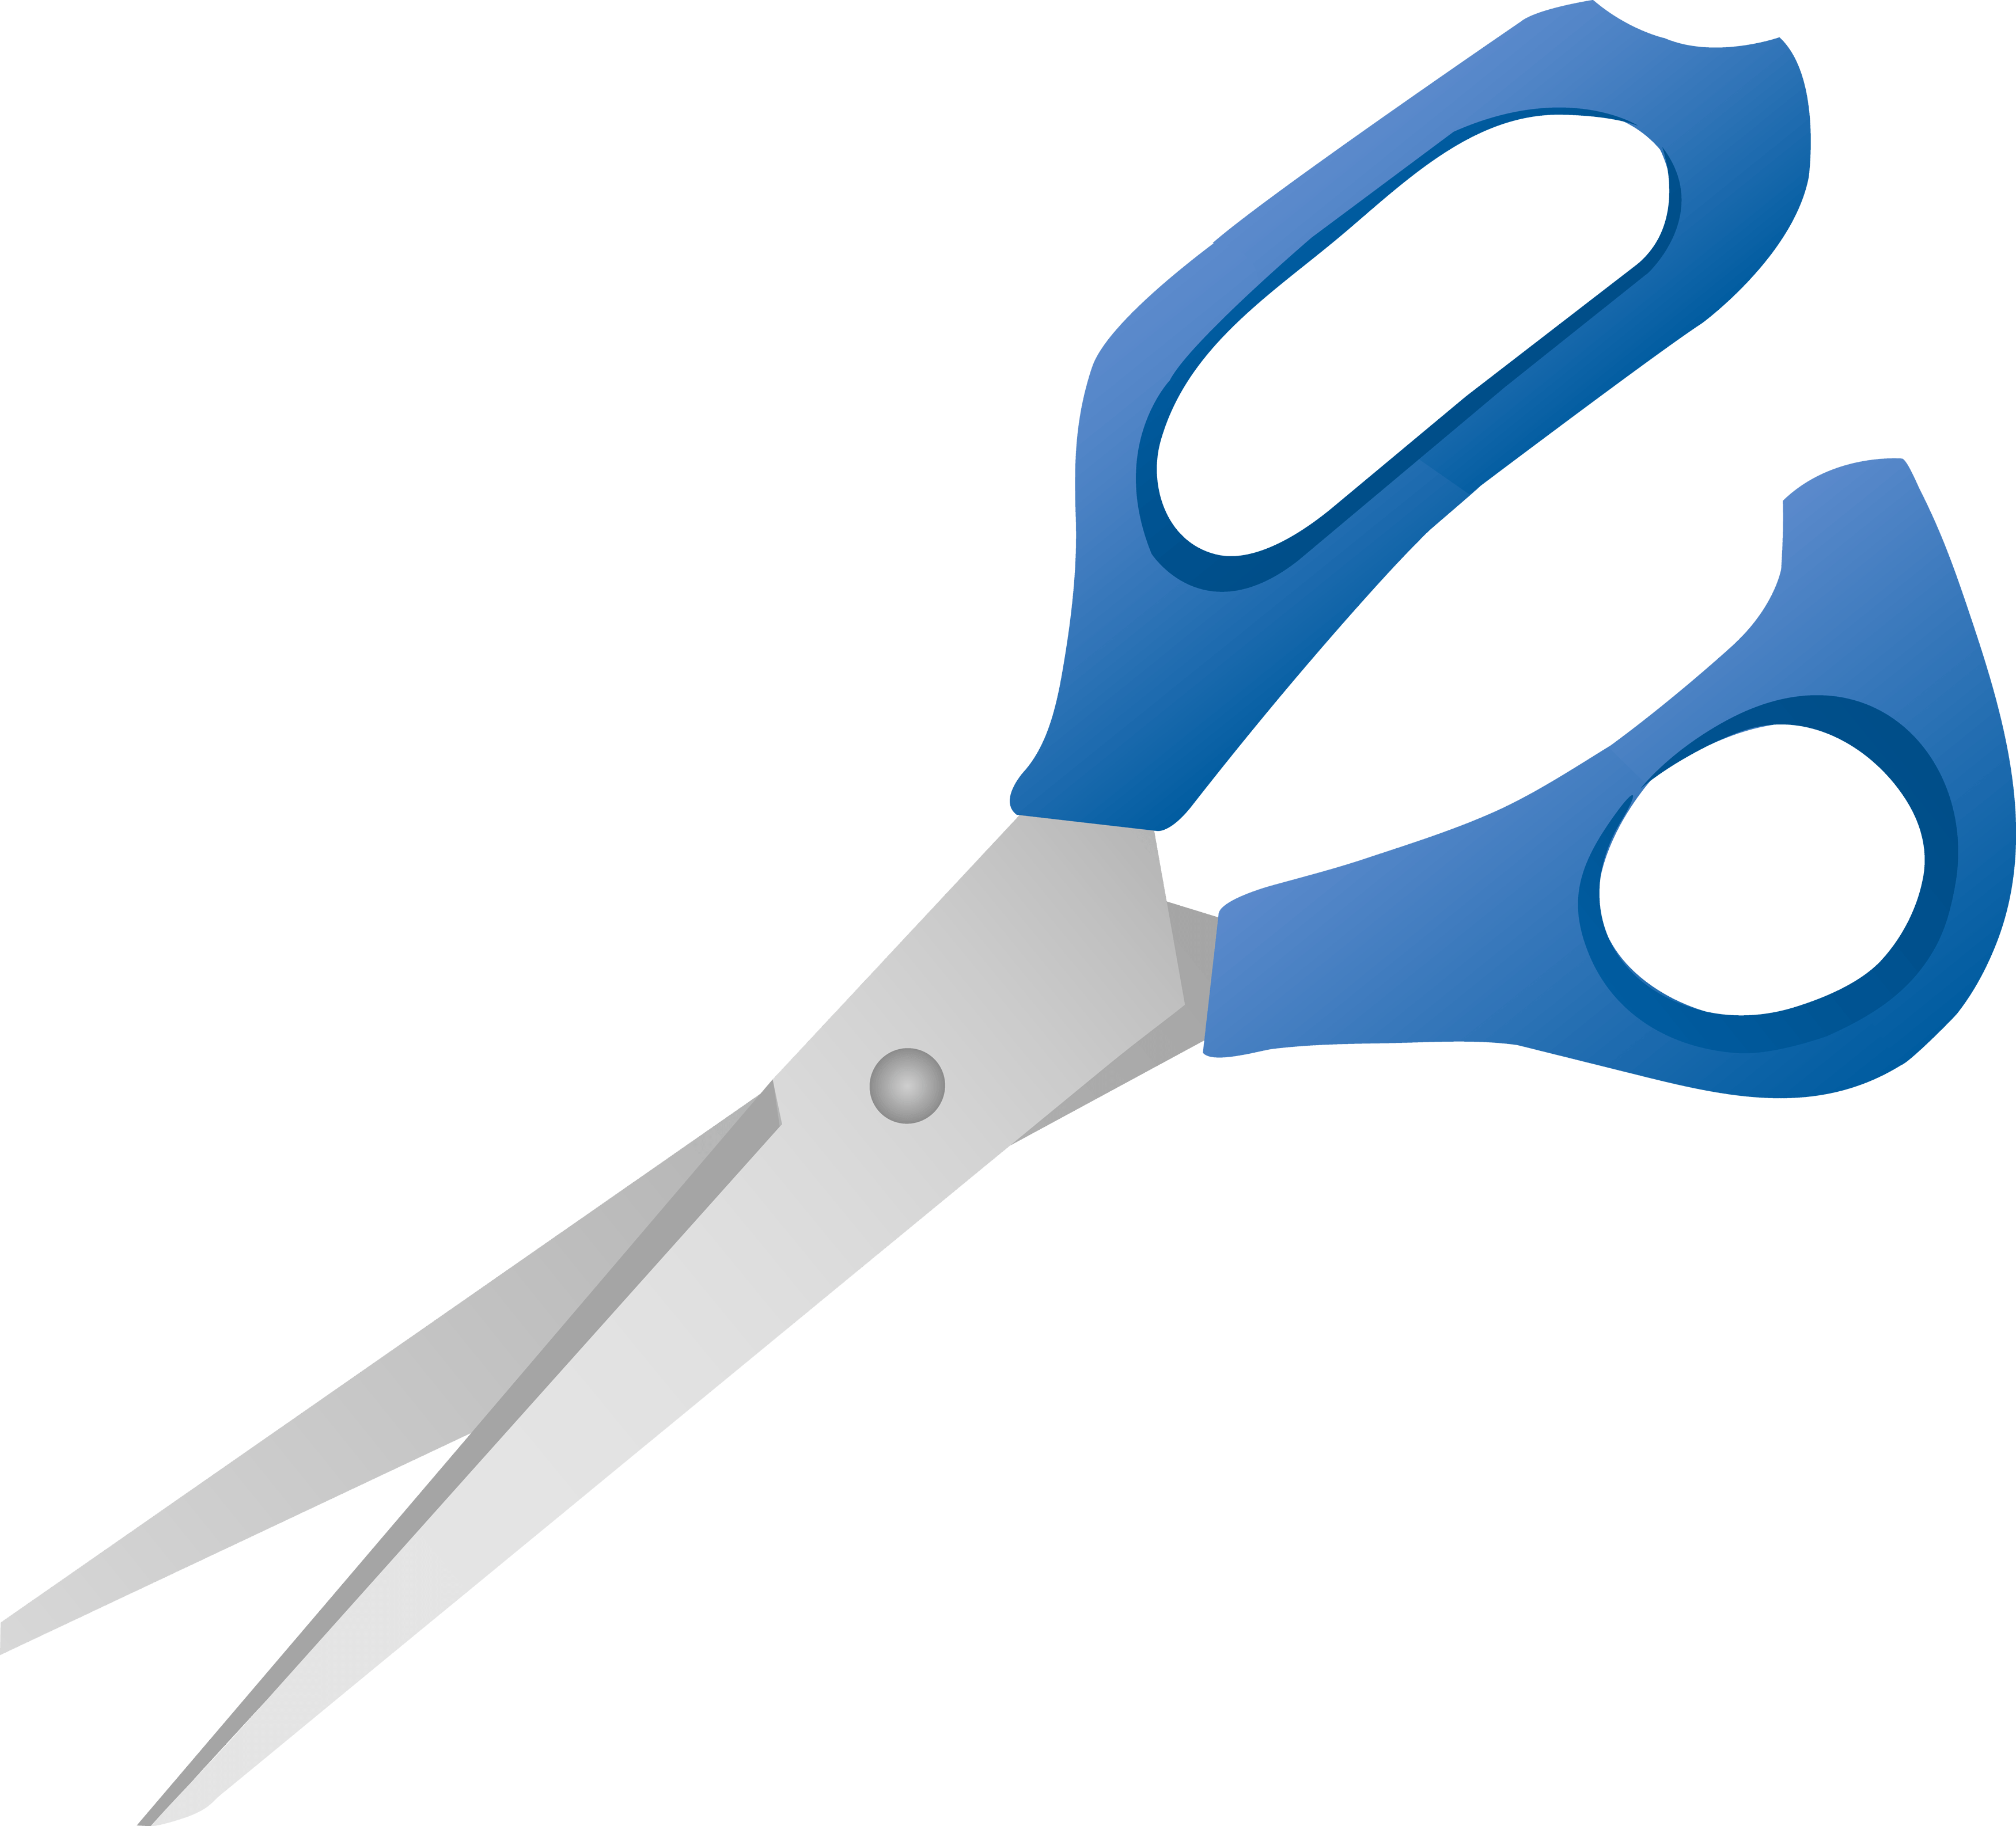 Blue Scissors Png Image Download PNG Image